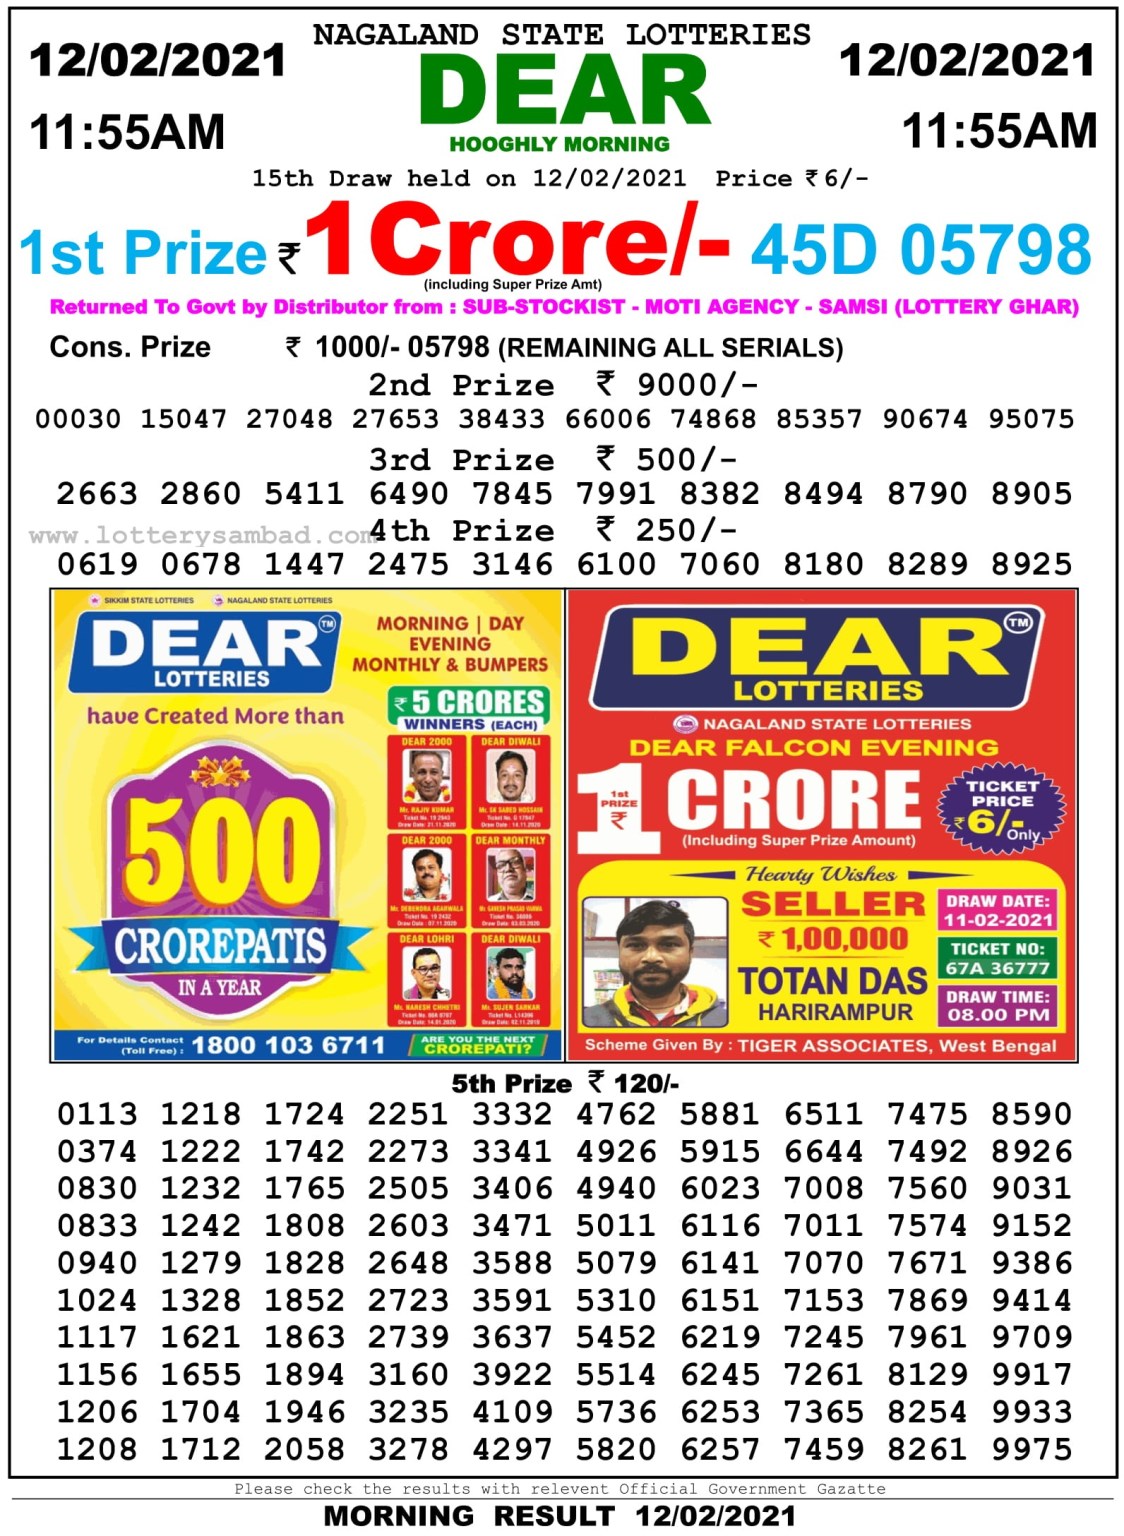 Dear Daily Lottery Result 11.55AM 12 Feb 2021